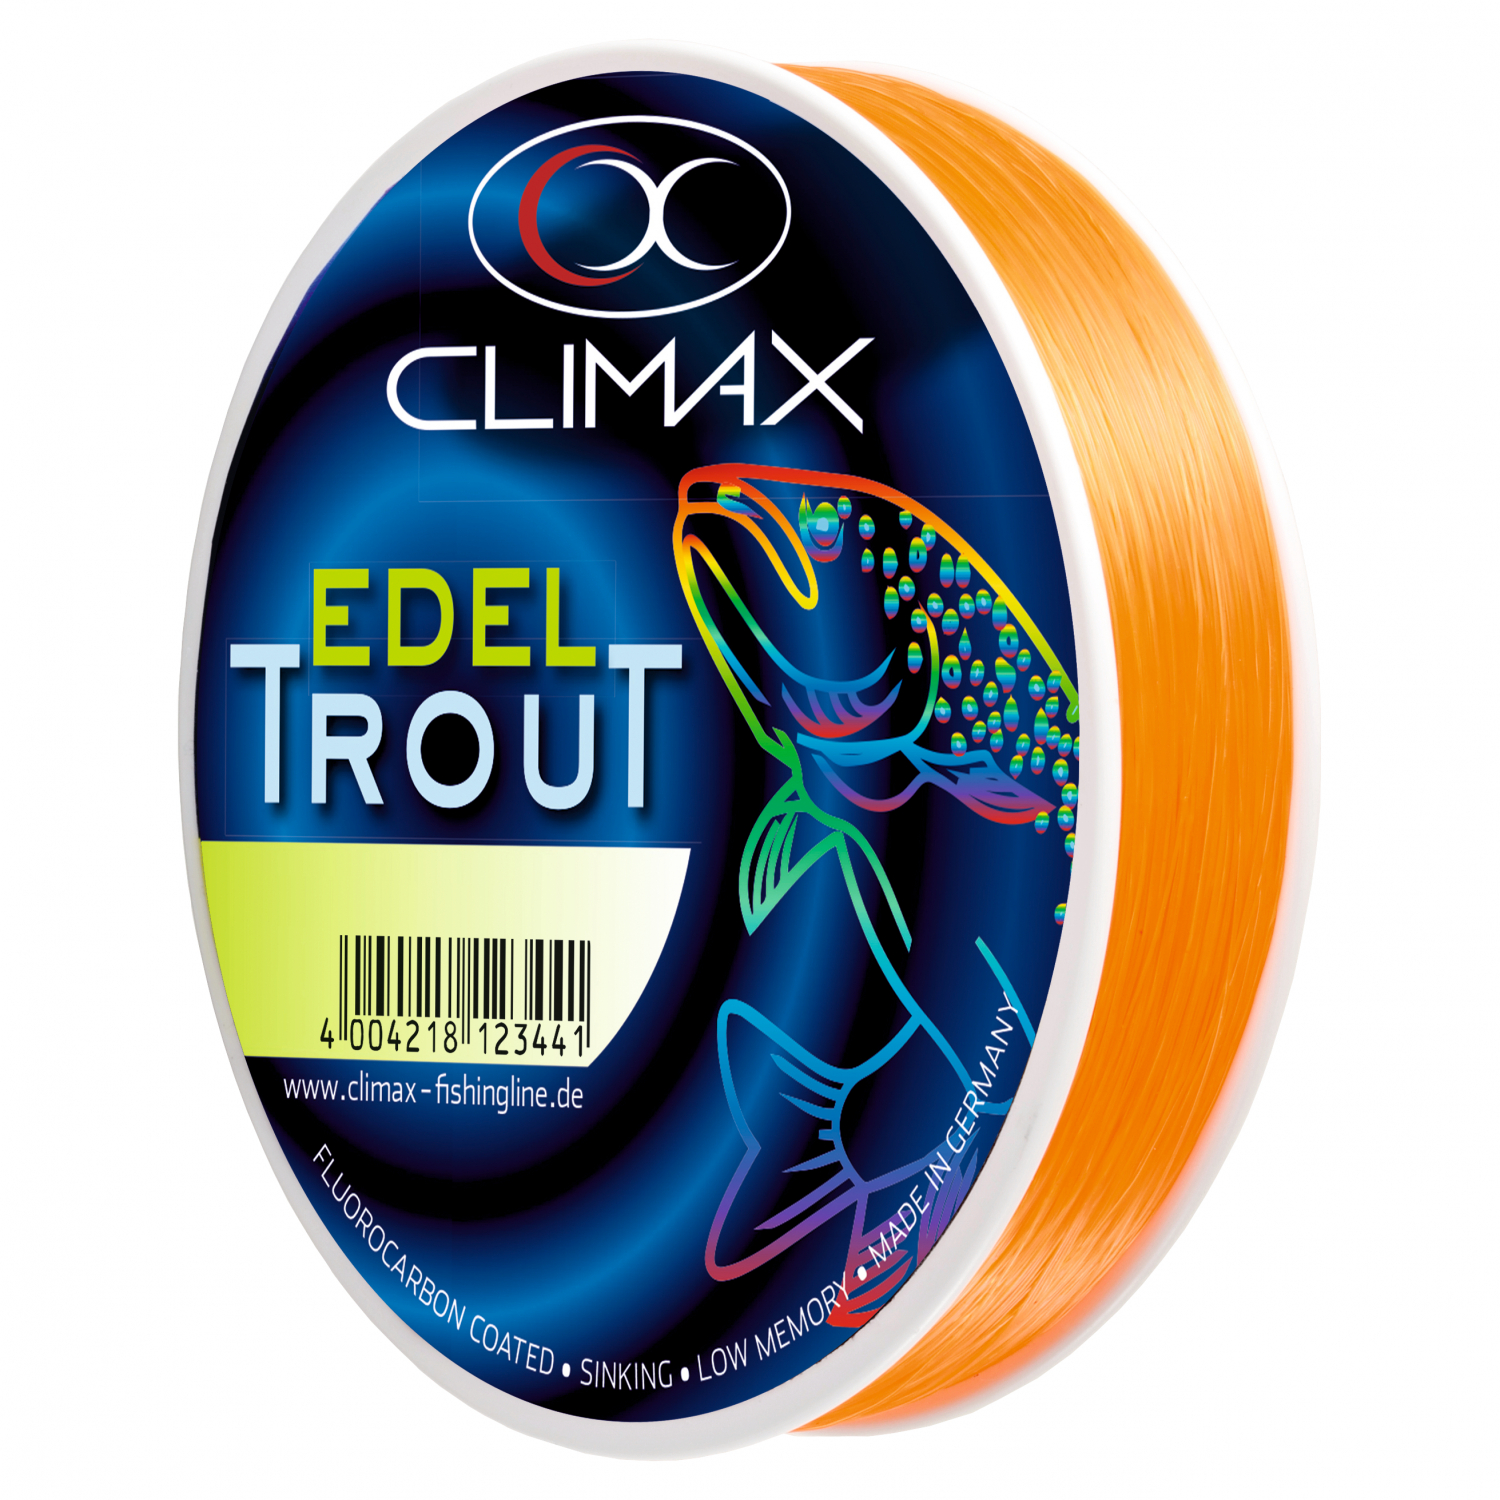 Climax Climax Edel-Trout Angelschnur (orange, 300 m) 